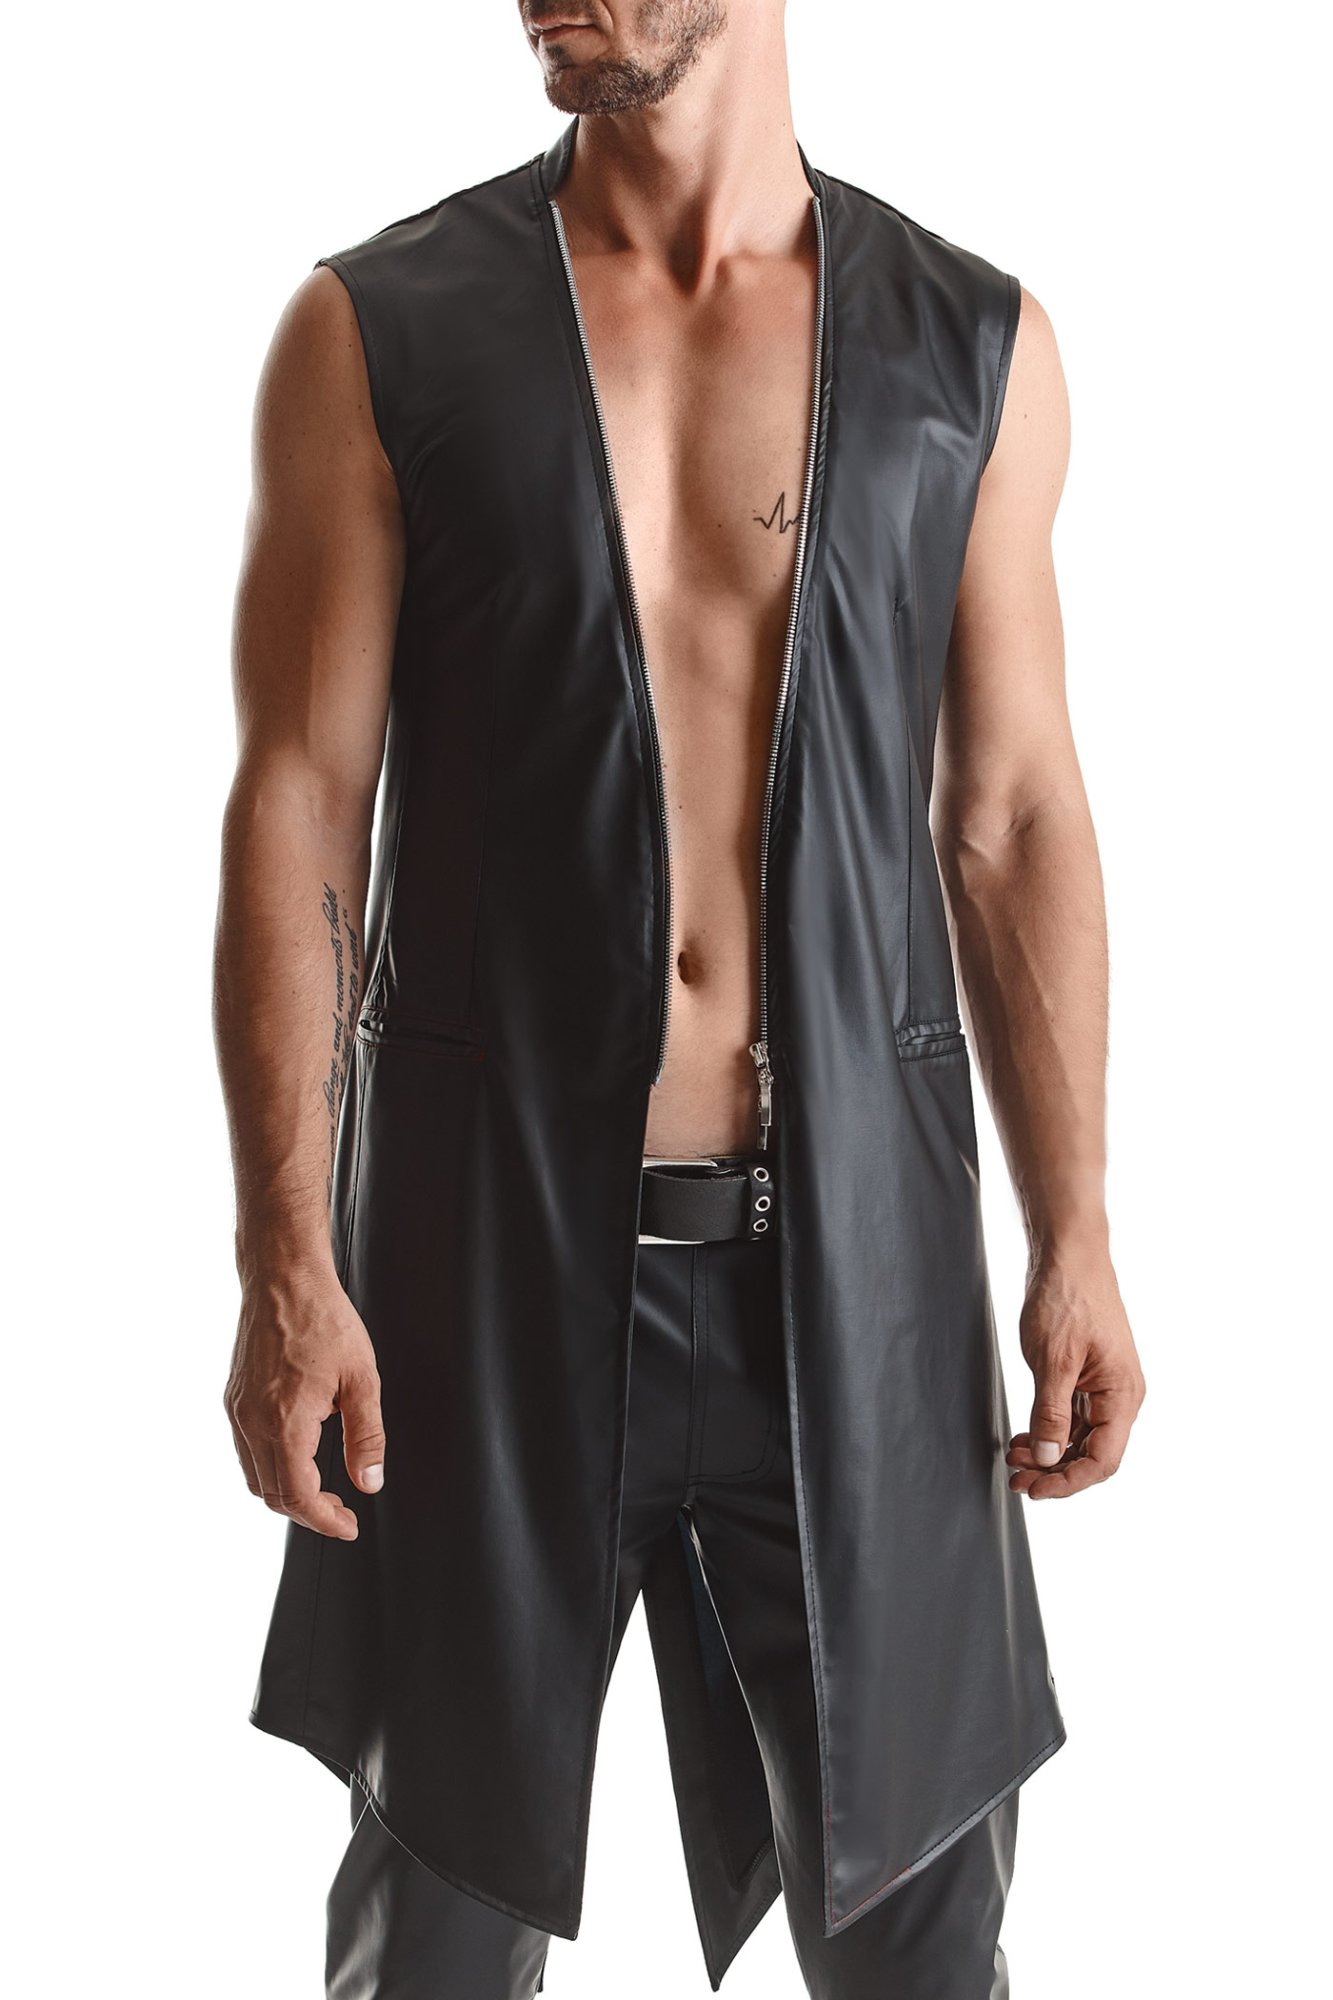 RMMarco001 – black vest – XL